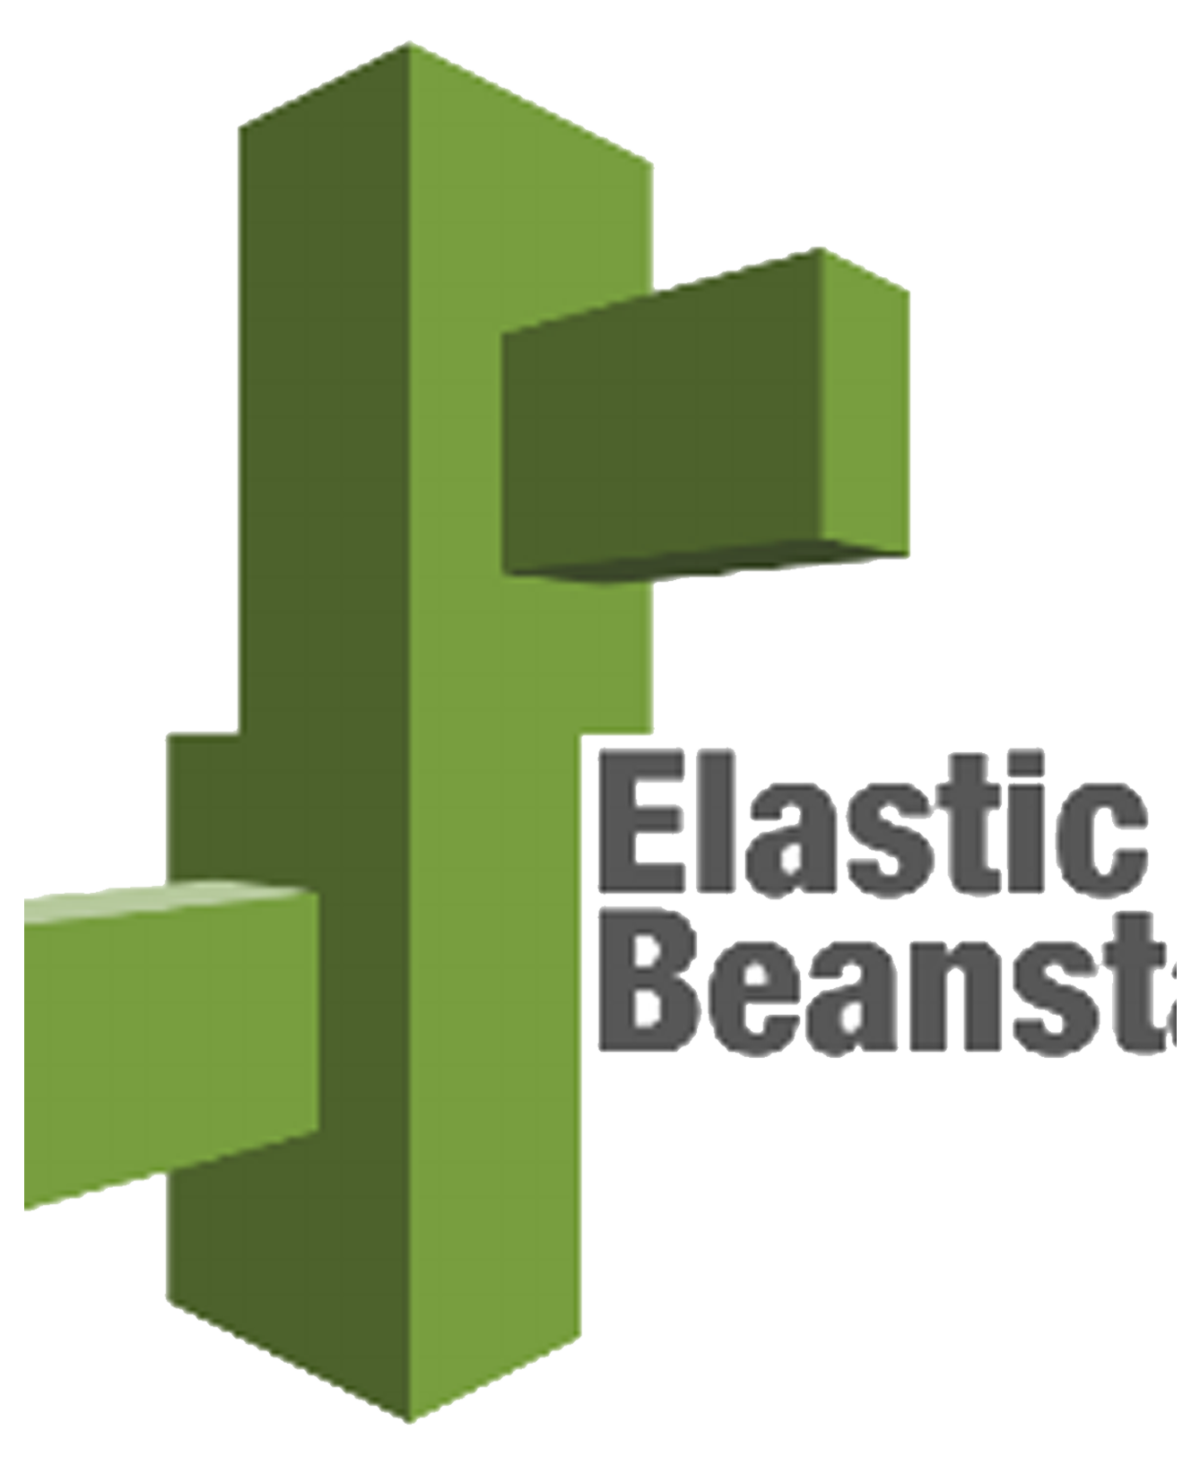 Changing the Platform version in Elastic Beanstalk application